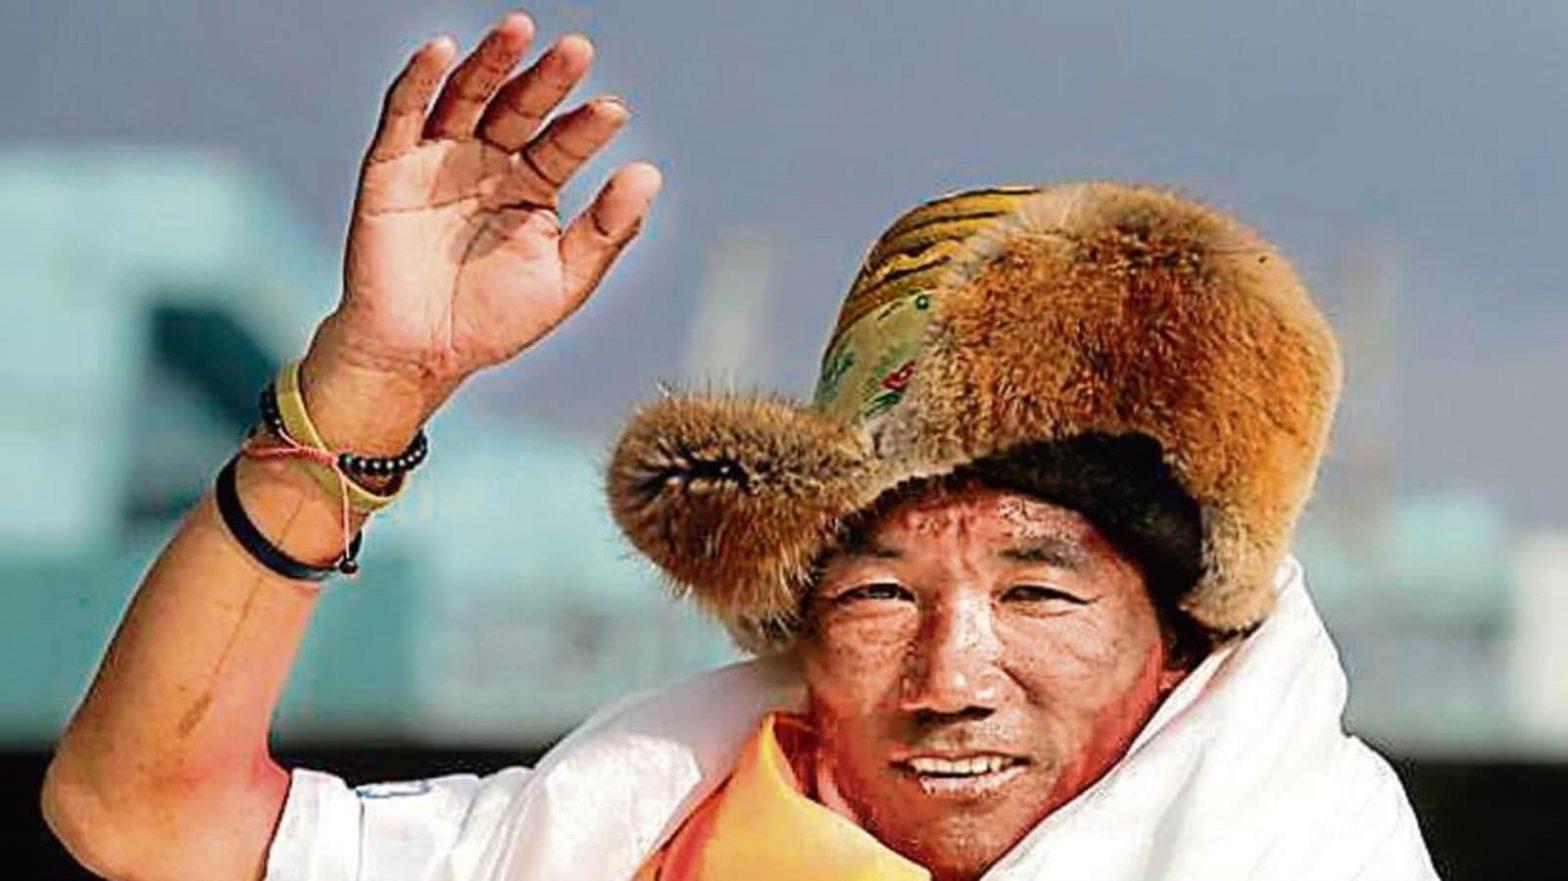 Nepal's Kami Rita scales Everest for record 25th time| নেপালের কামি রিতা 25তম বারের জন্য এভারেস্ট জয় করে রেকর্ড করলেন _2.1